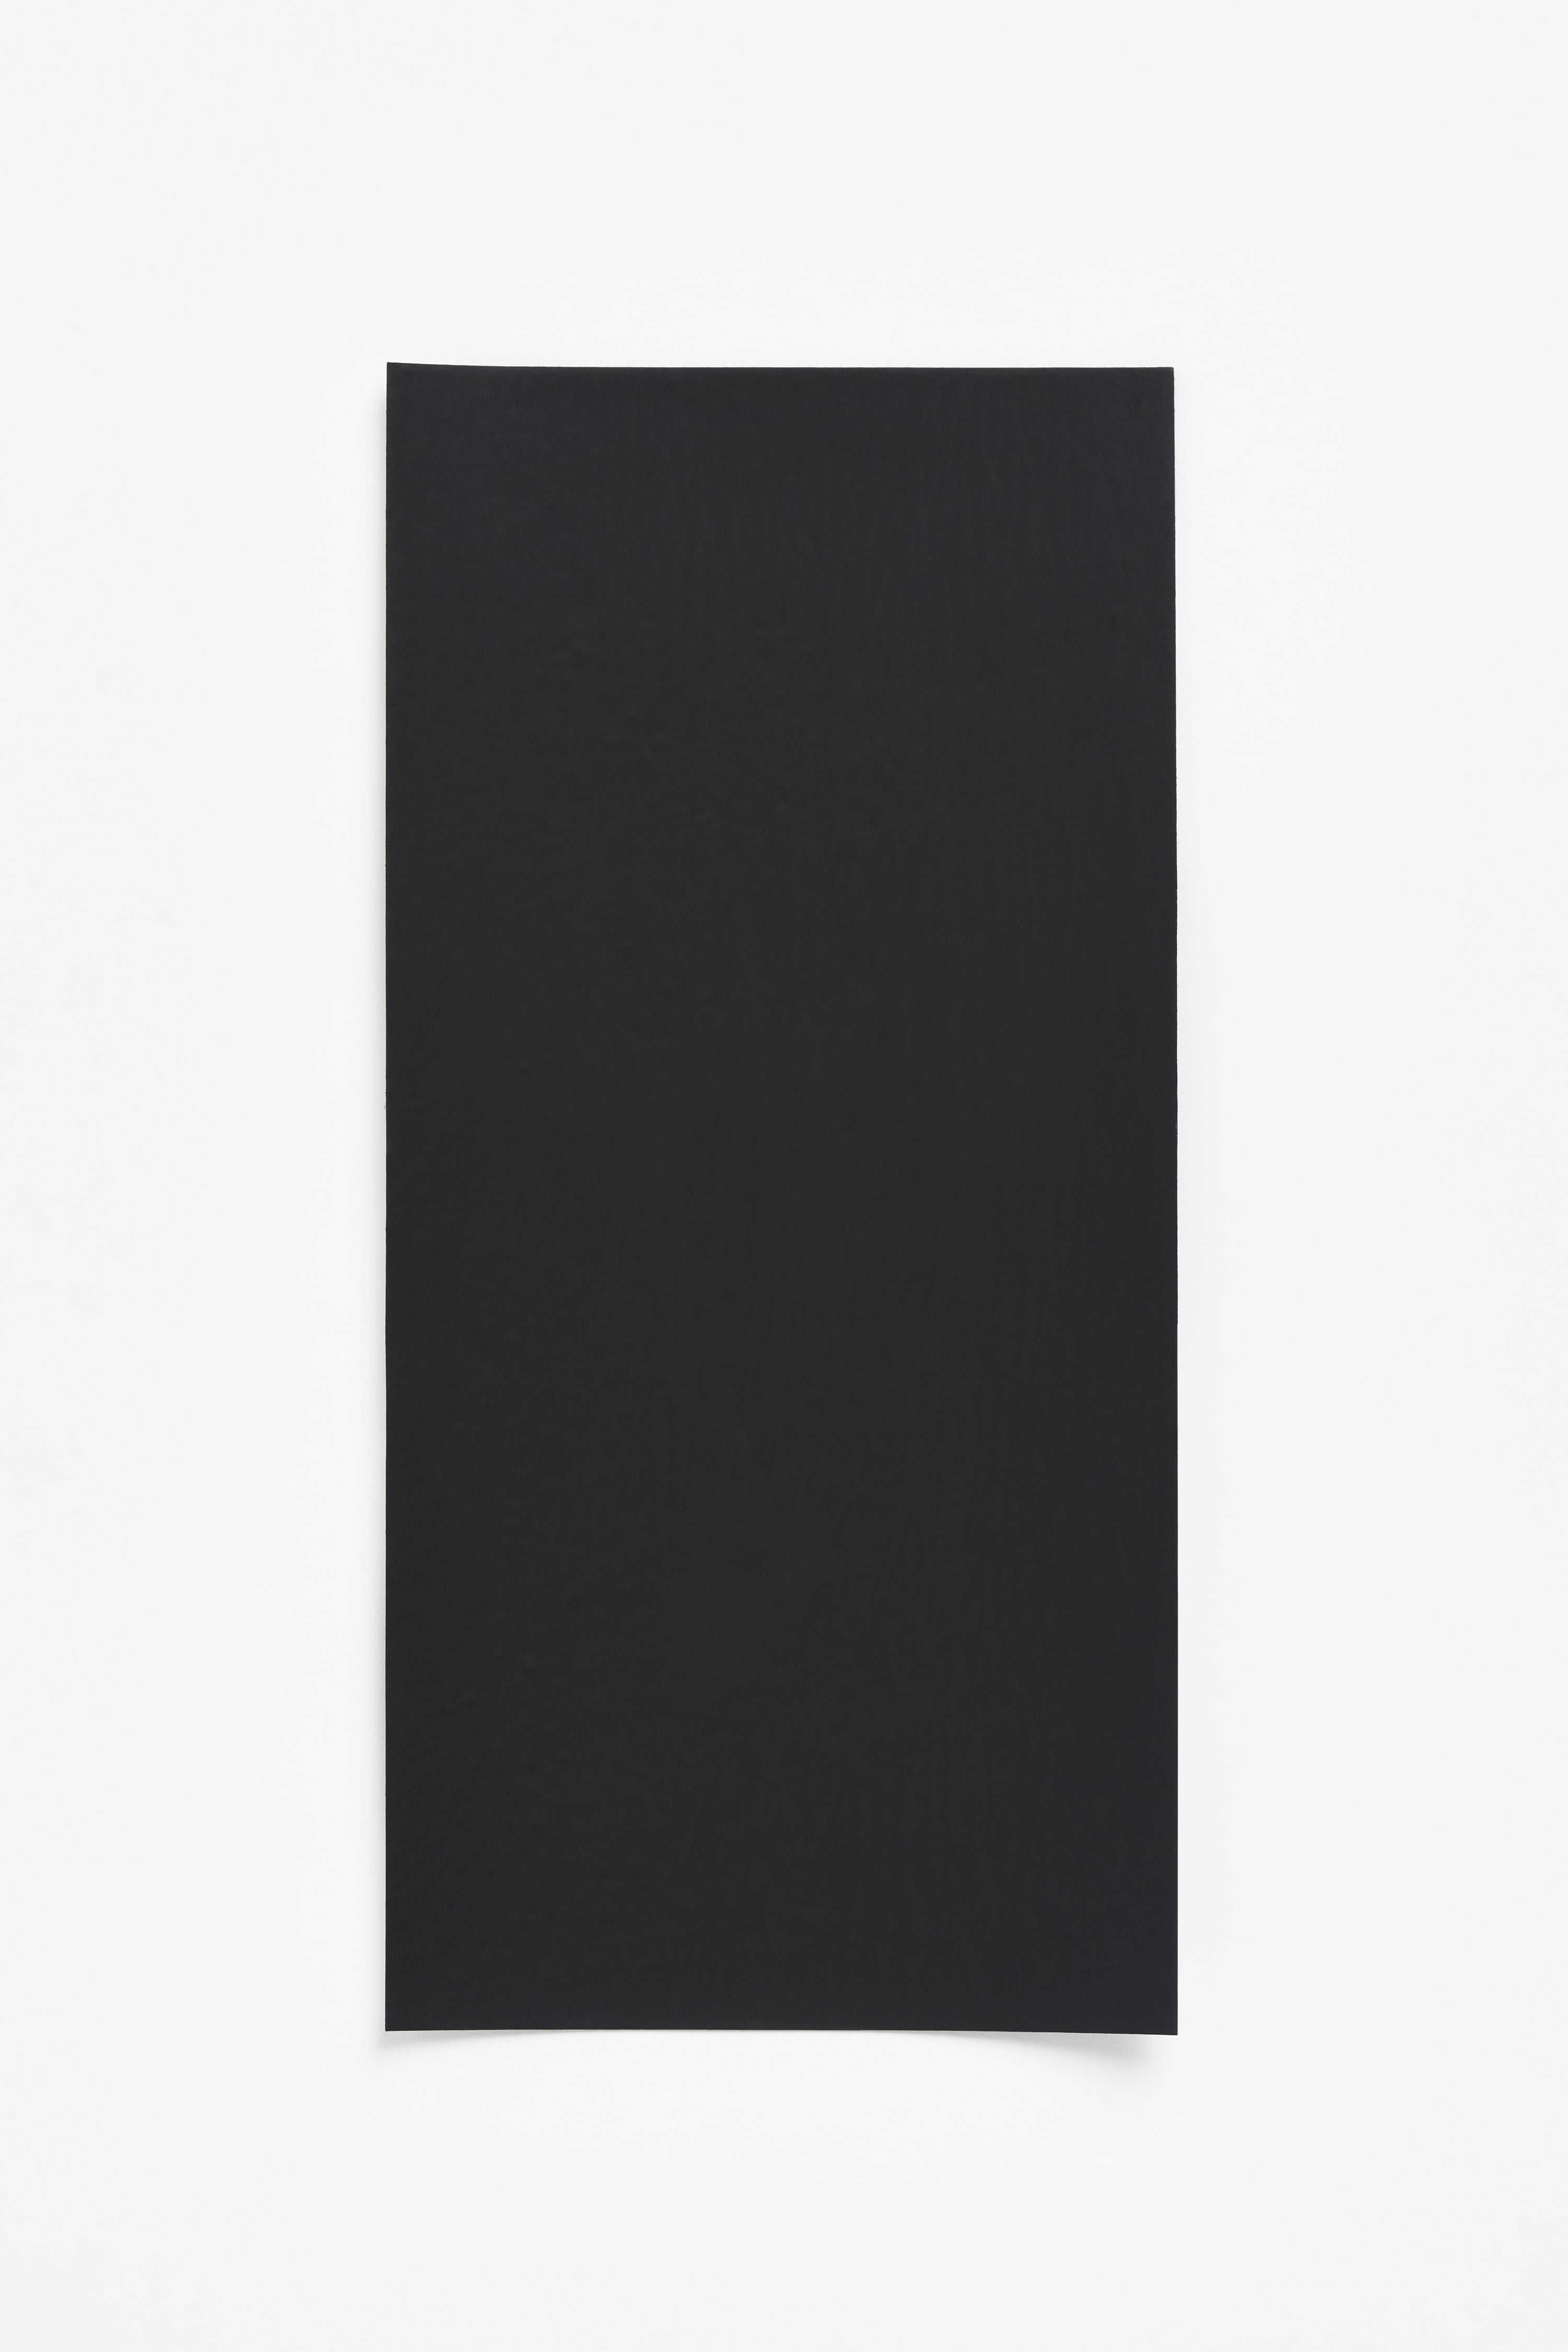 Gill Black — a paint colour developed by Cecilie Bahnsen for Blēo